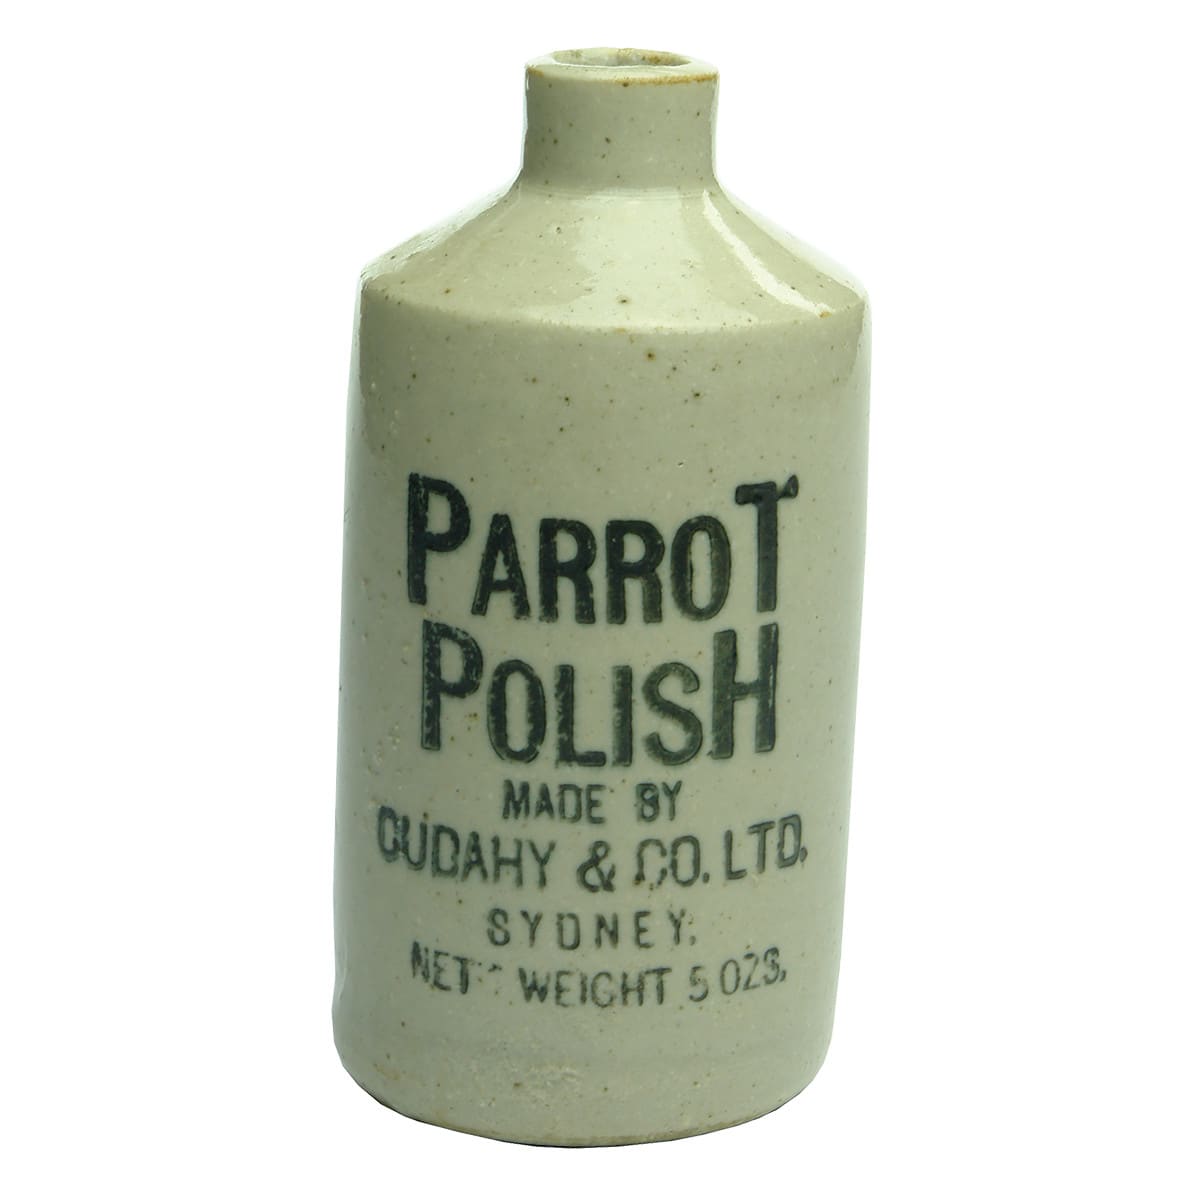 Stoneware Polish. Parrot Polish, Cudahy & Co Ltd., Sydney. (New South Wales)